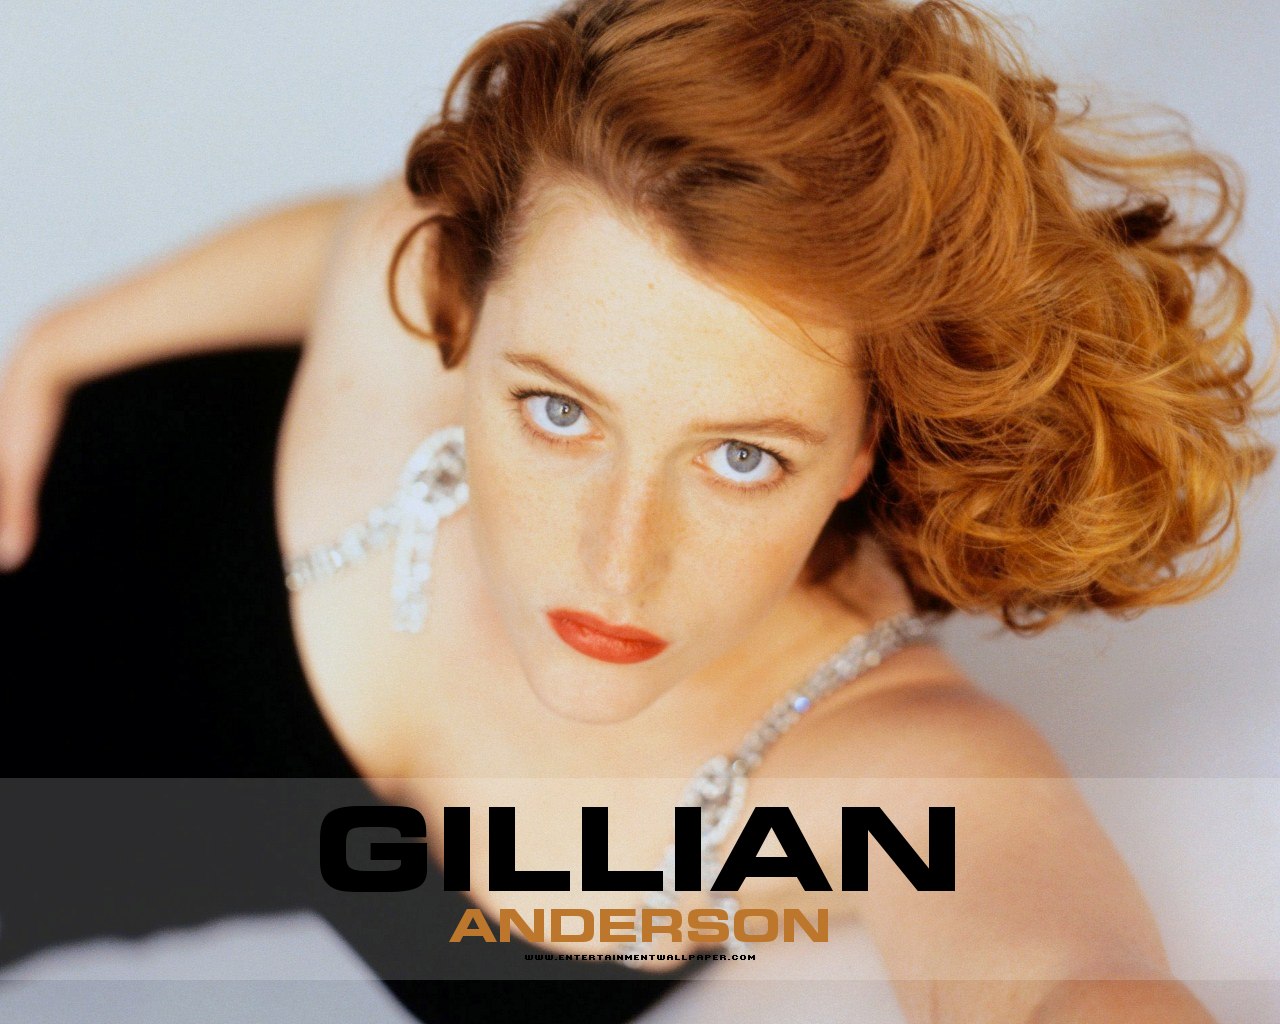 Gillian Anderson - Gillian Anderson Wallpaper (32316774) - Fanpop